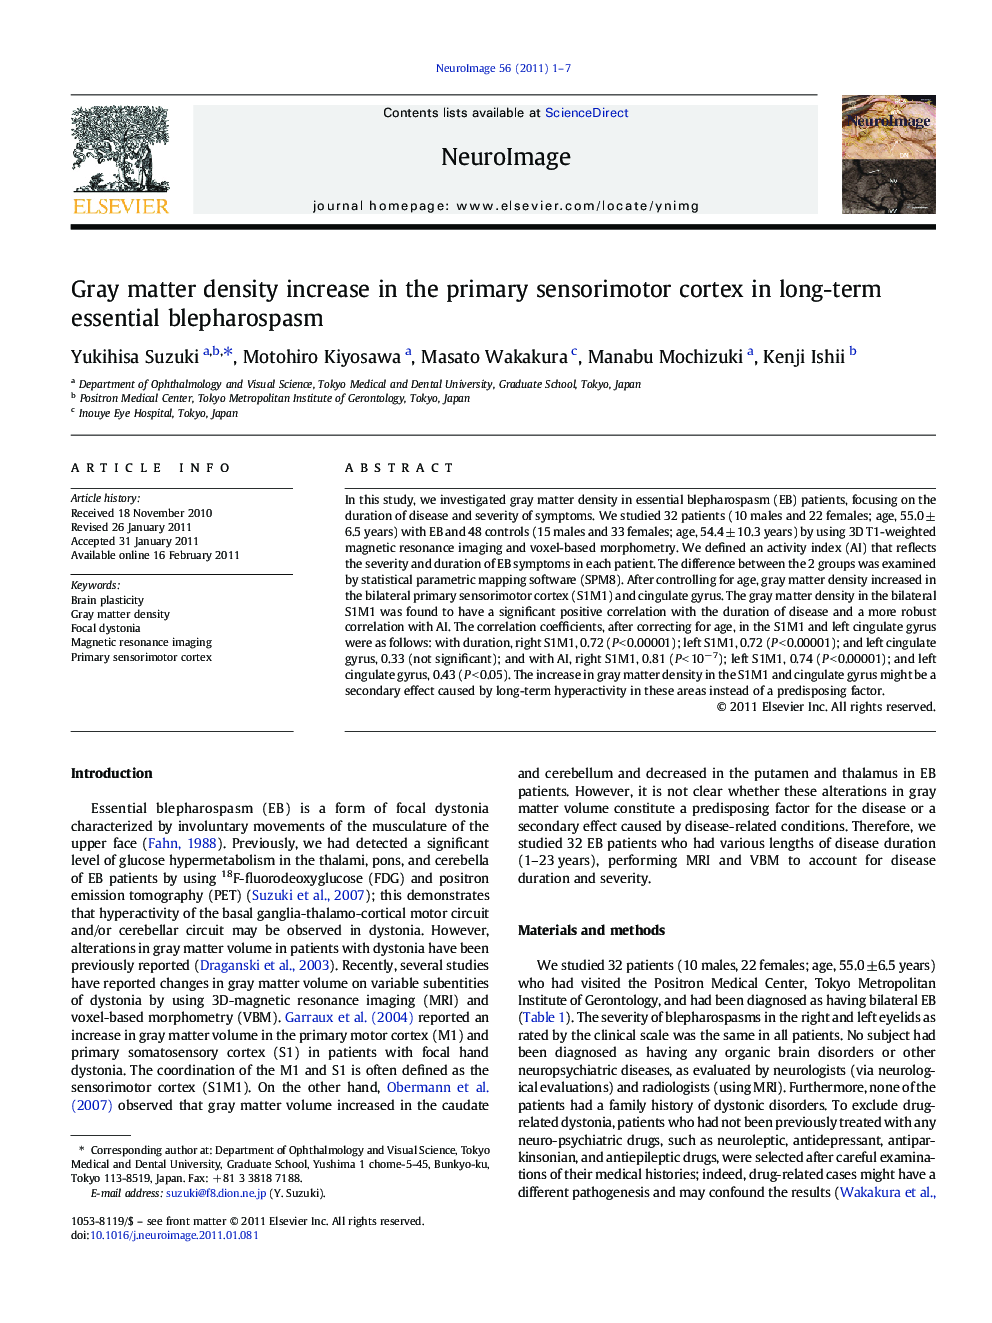 Gray matter density increase in the primary sensorimotor cortex in long-term essential blepharospasm